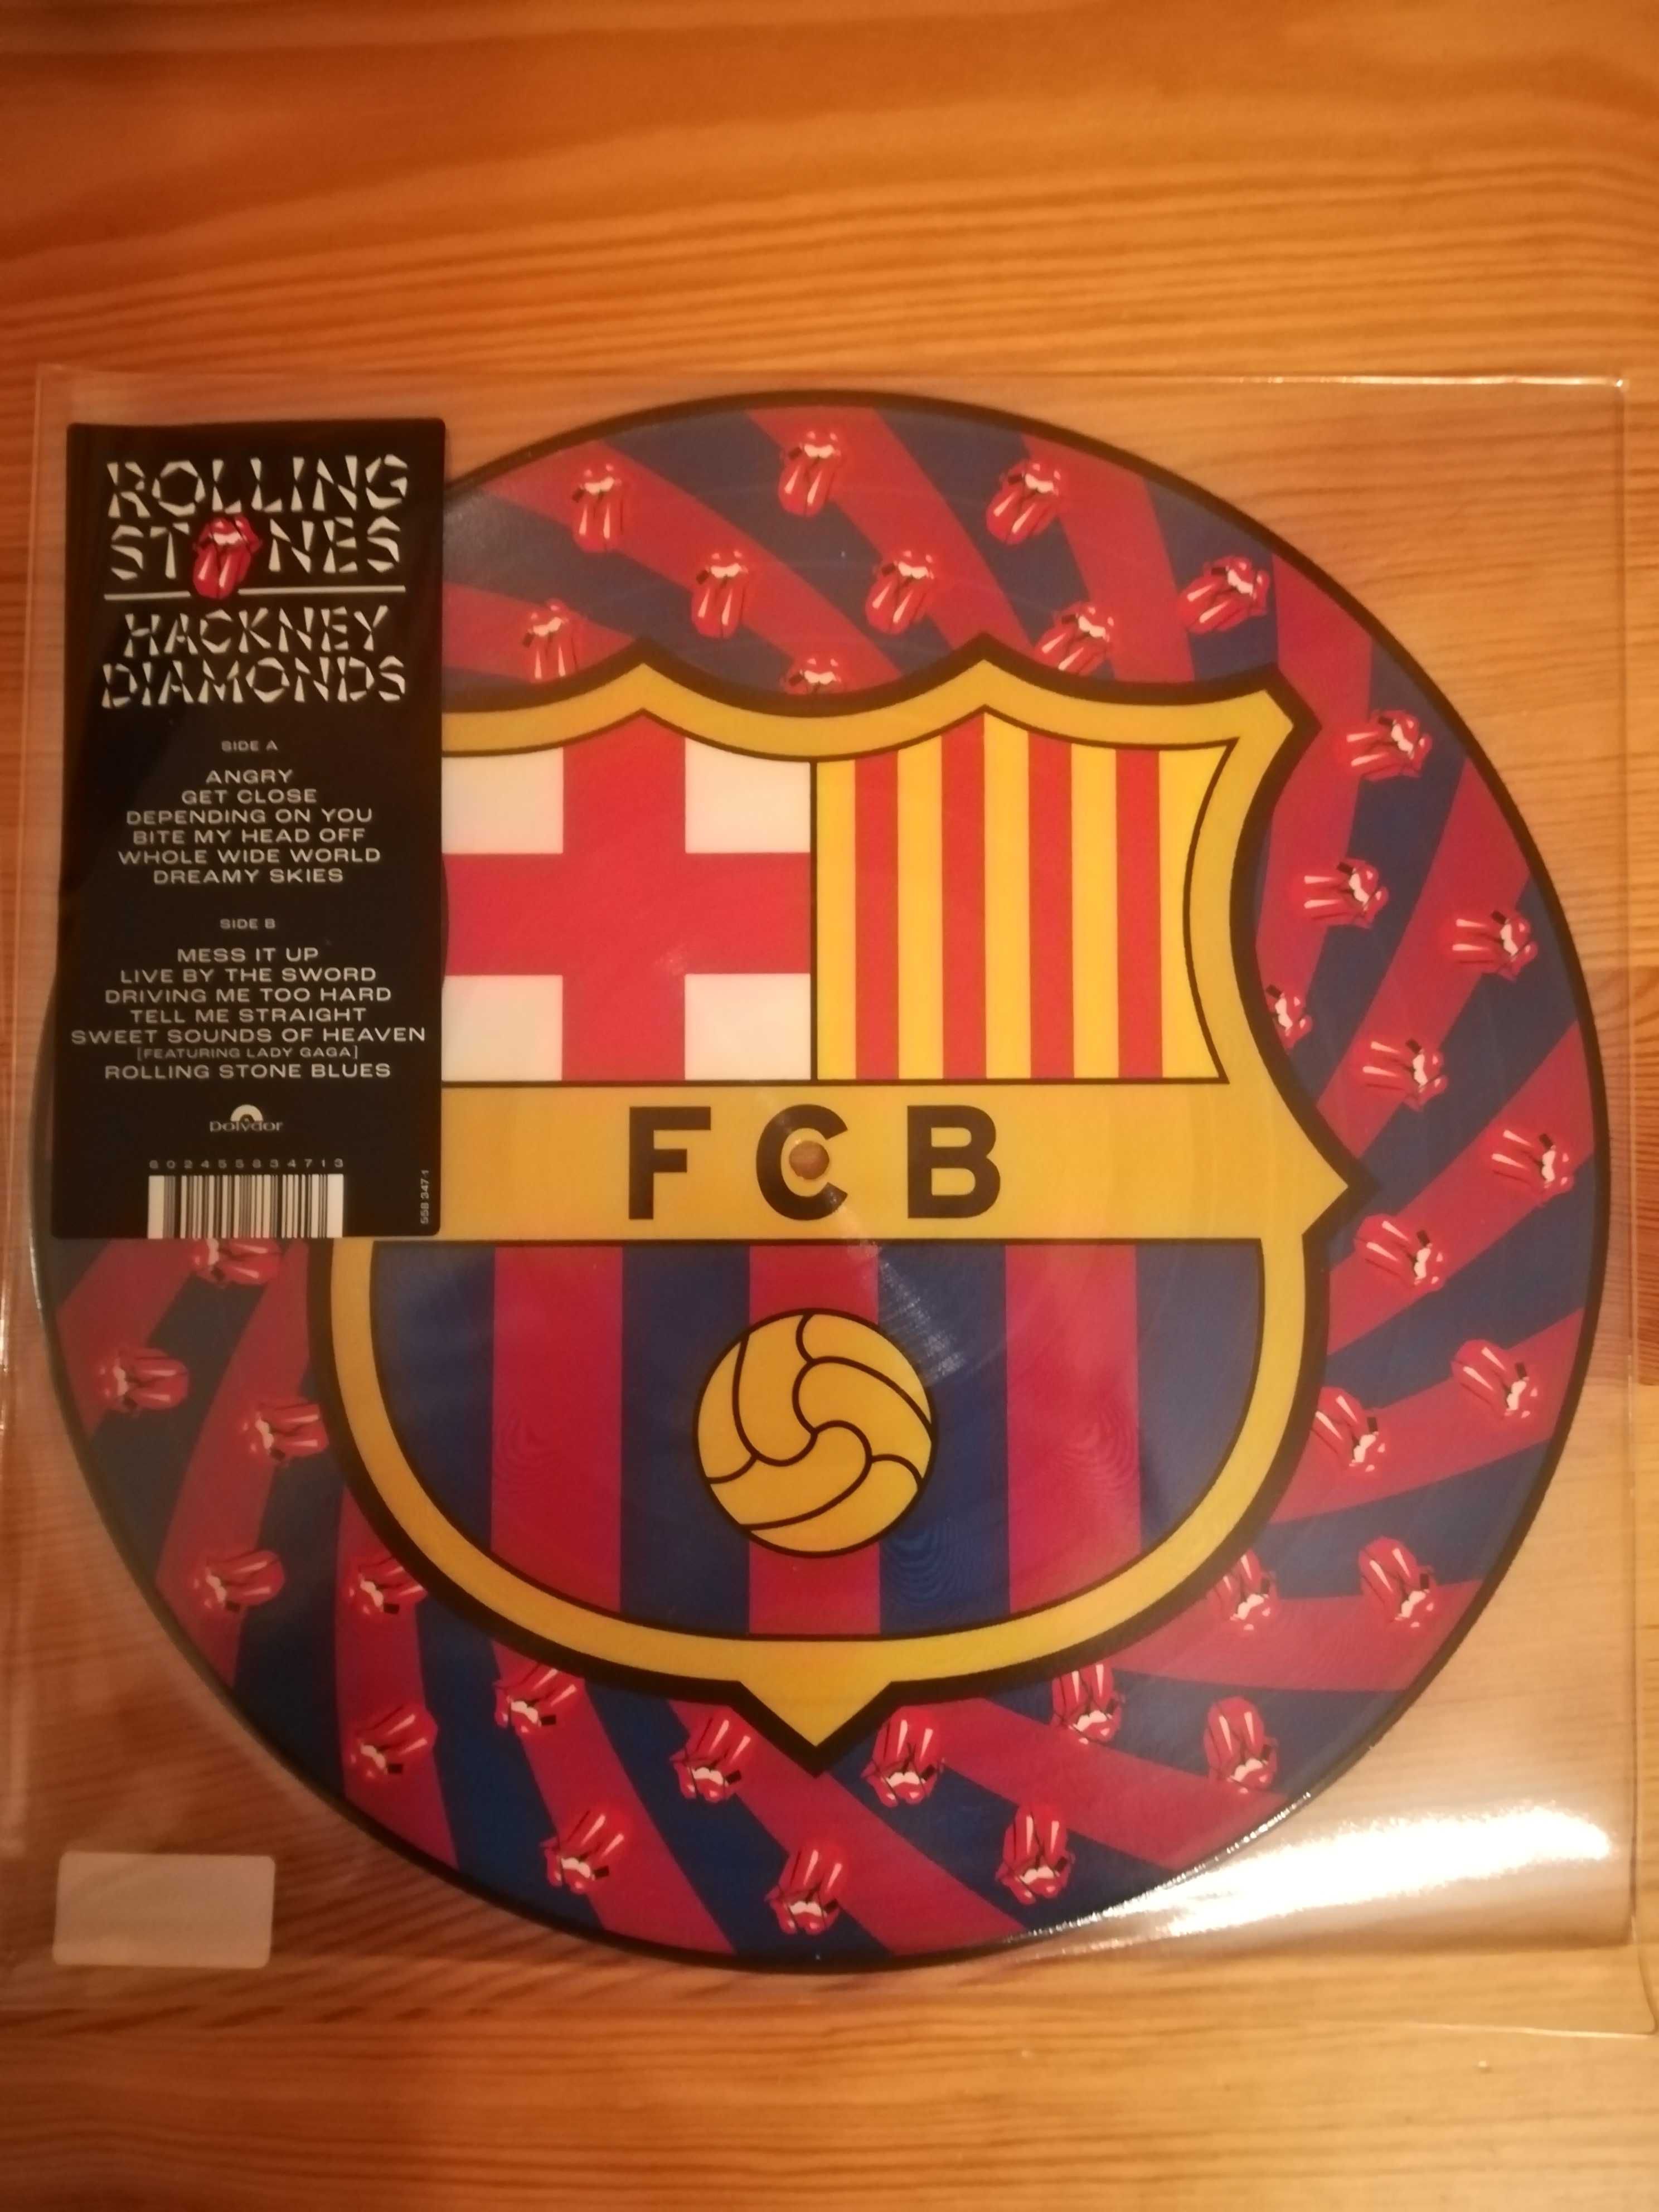 The Rolling Stones Hackney Diamonds winyl FC BARCELONA PICTURE DISC